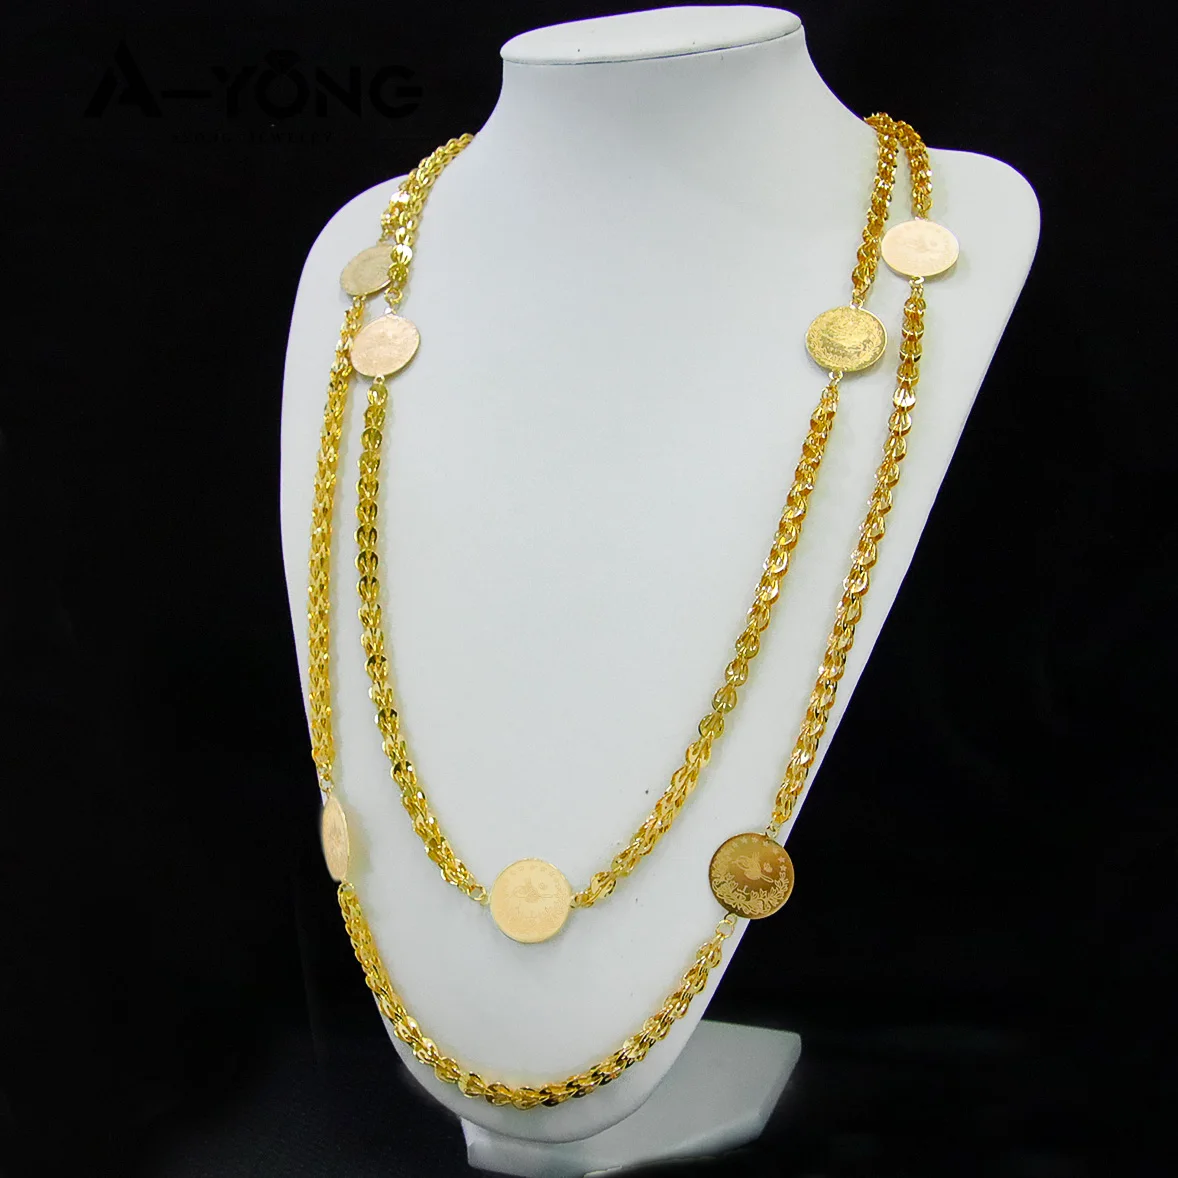 qushine women coin necklace long earrings| Alibaba.com